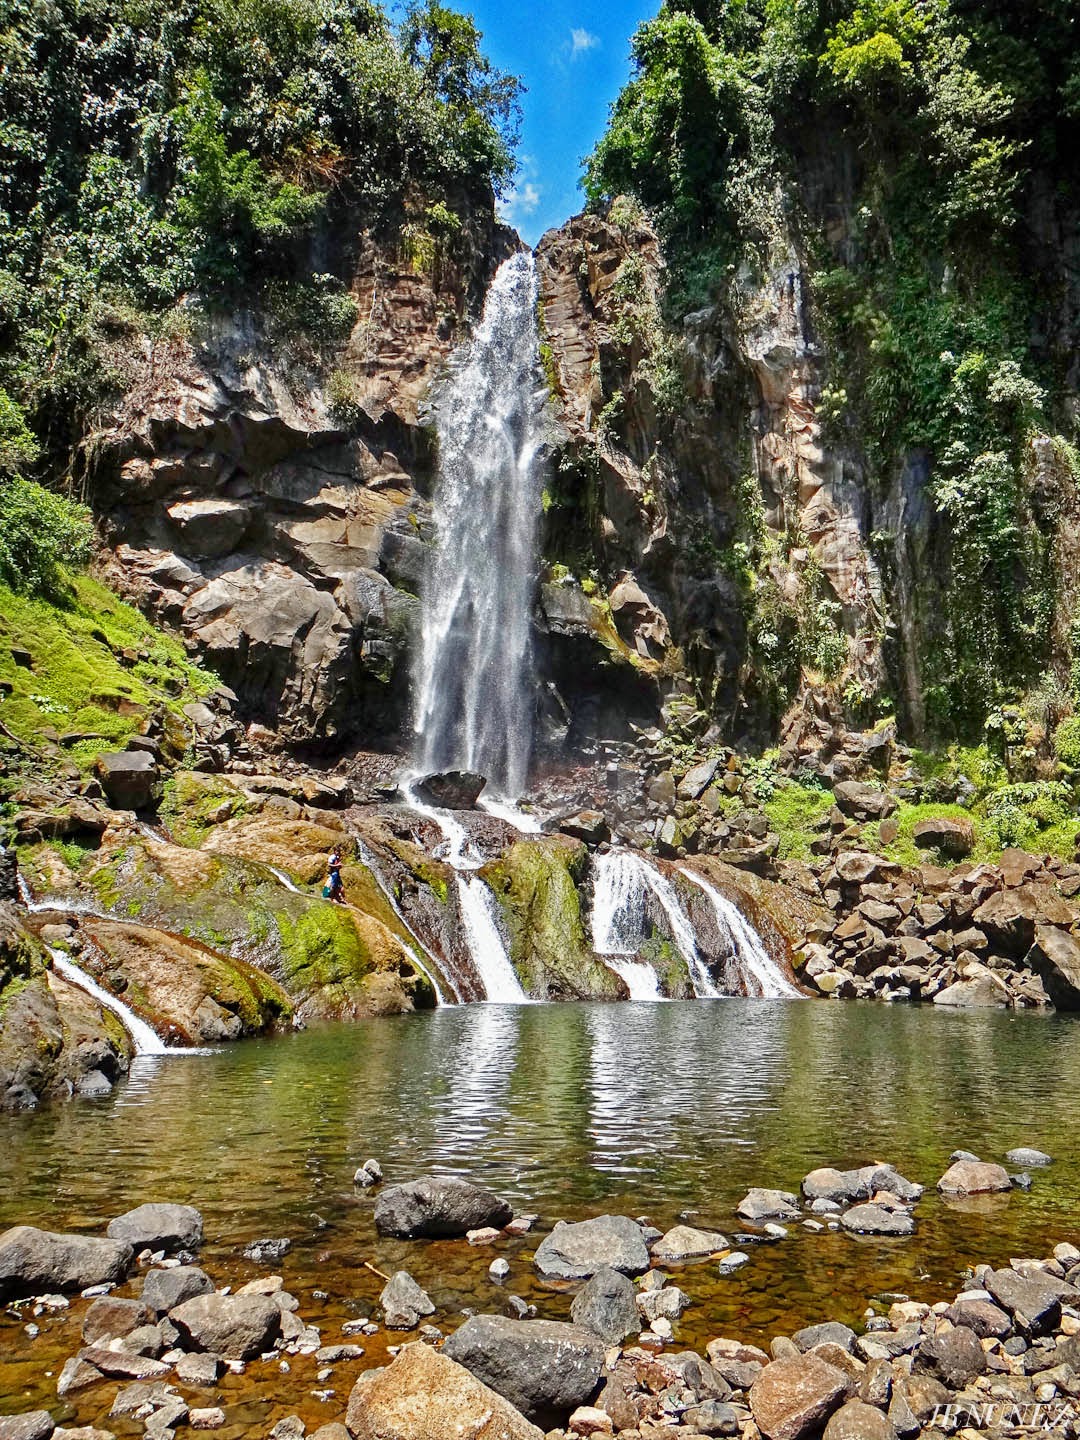  buntot palos, hidden falls, panguil, laguna